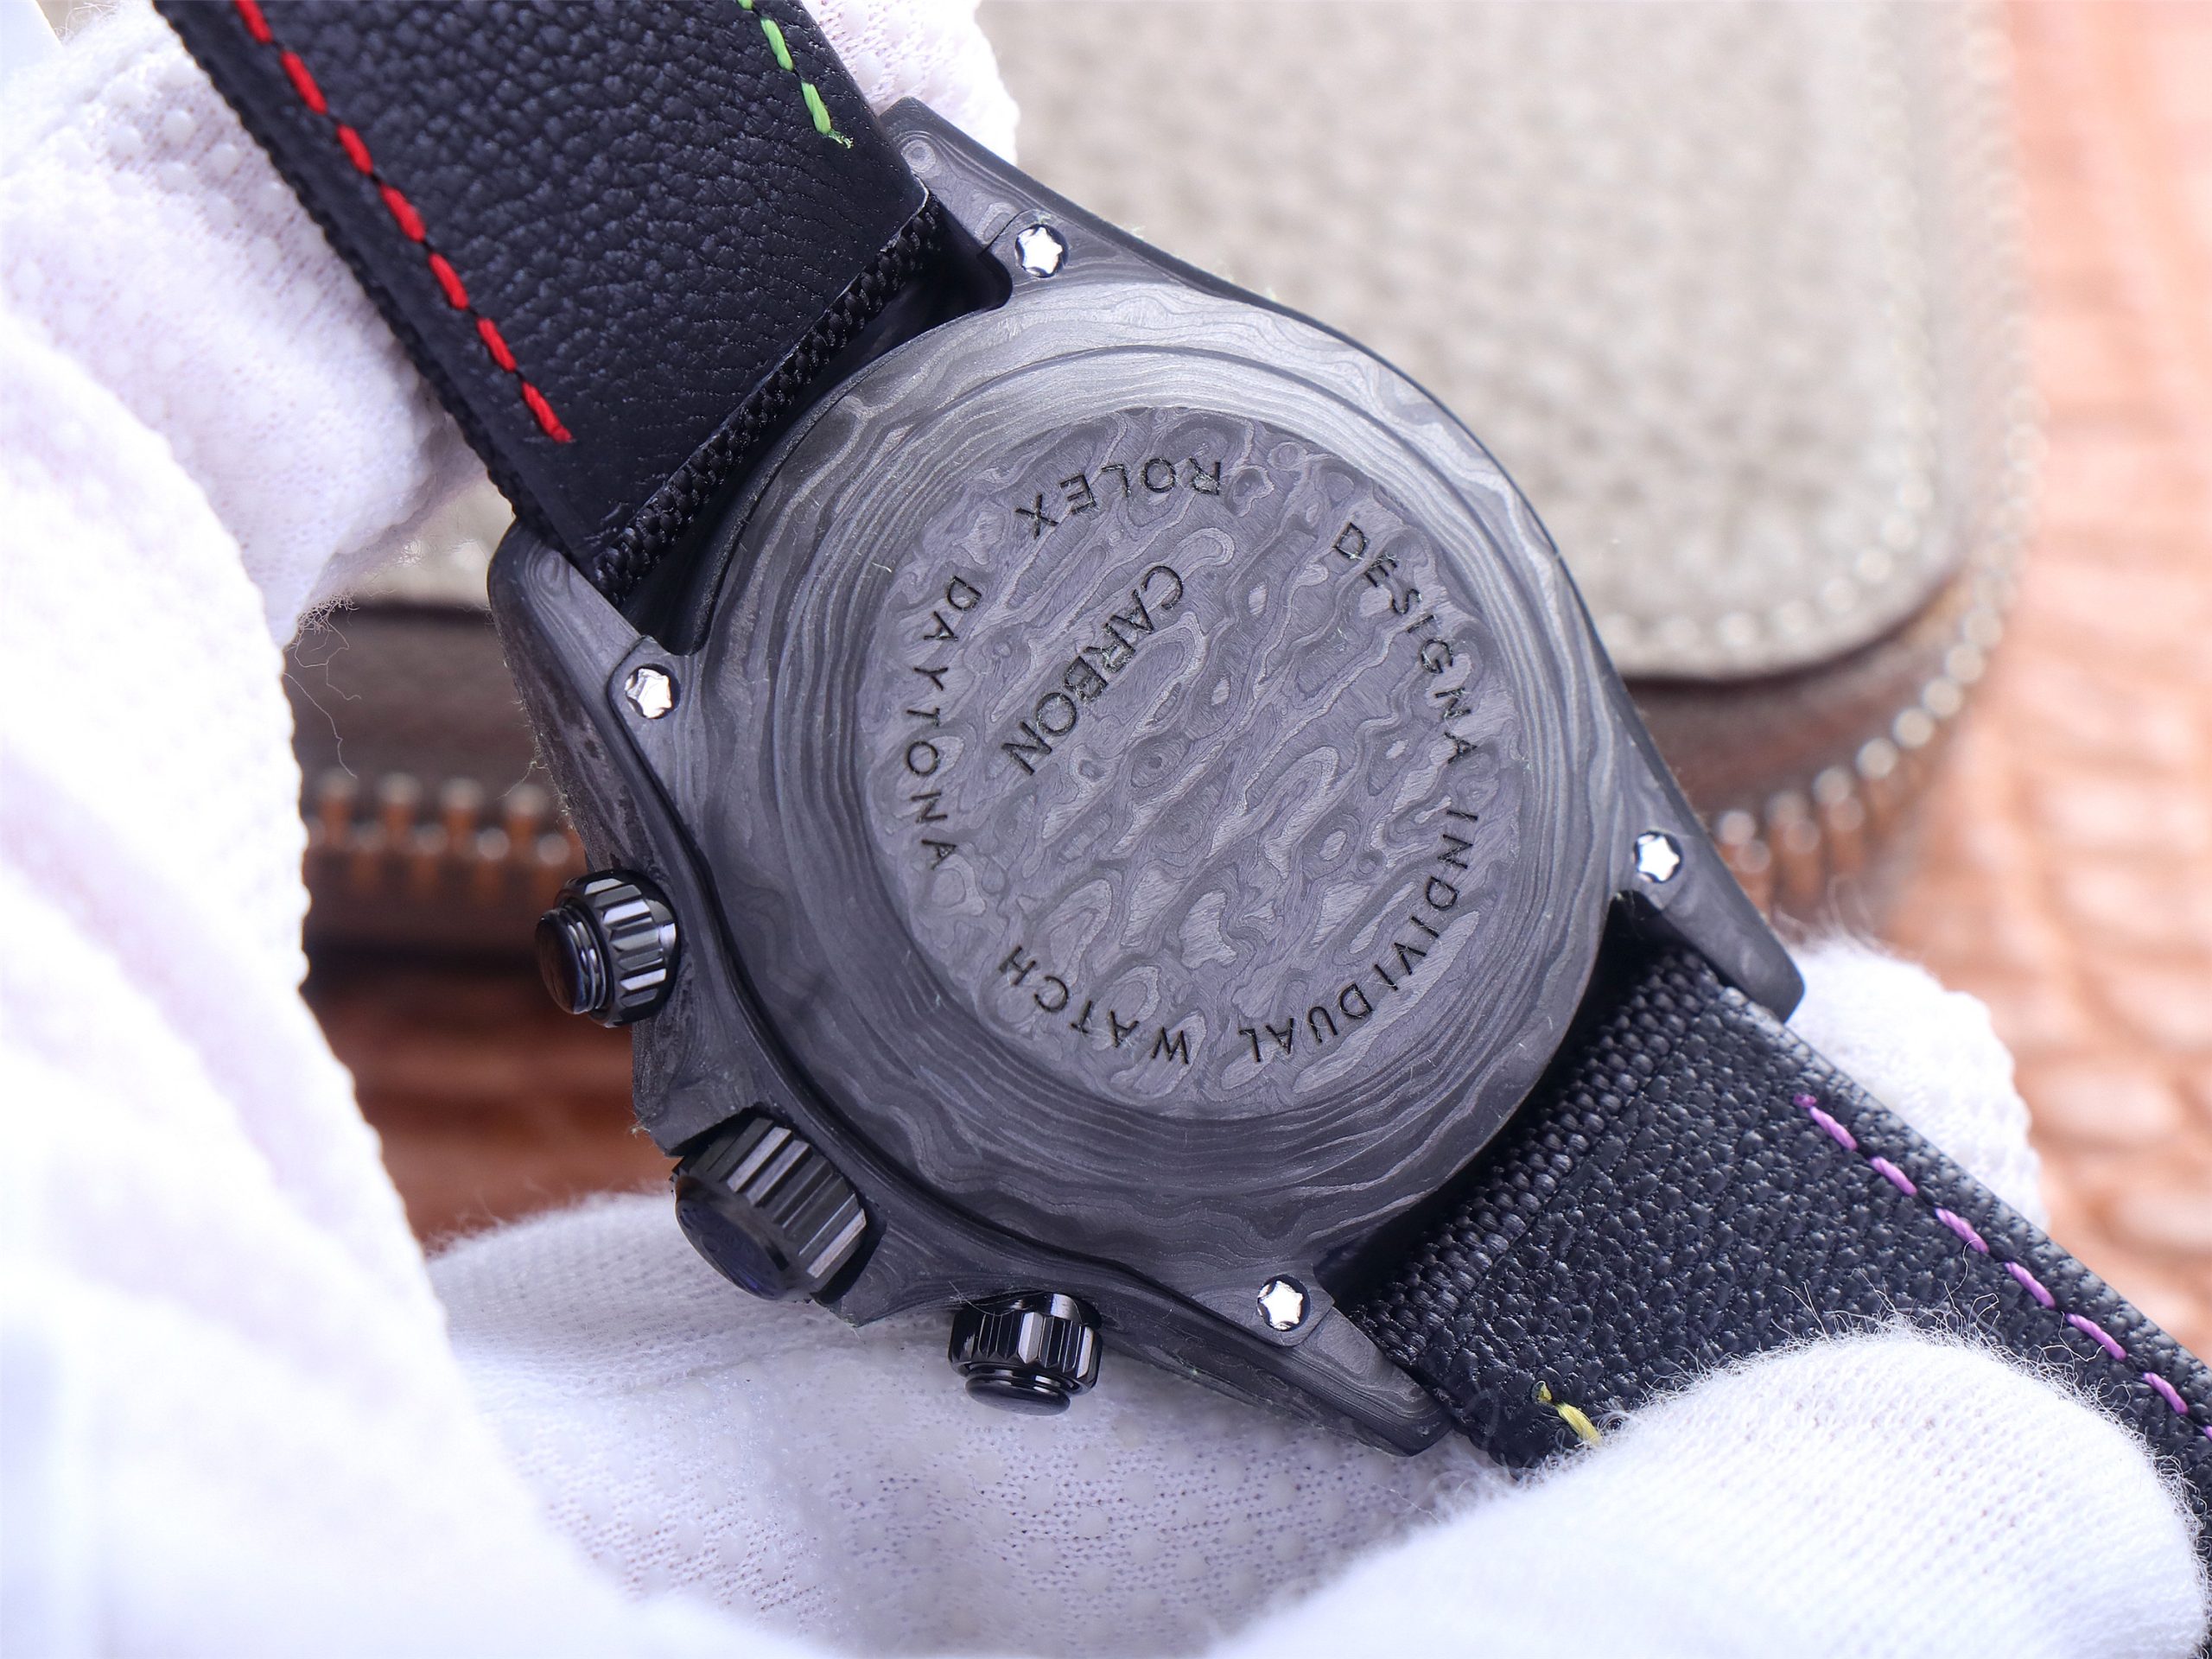 2023021205241269 scaled - 仿勞力士迪通拿價格及圖片 JH廠手錶精仿勞力士迪通拿碳纖維定制版￥4580